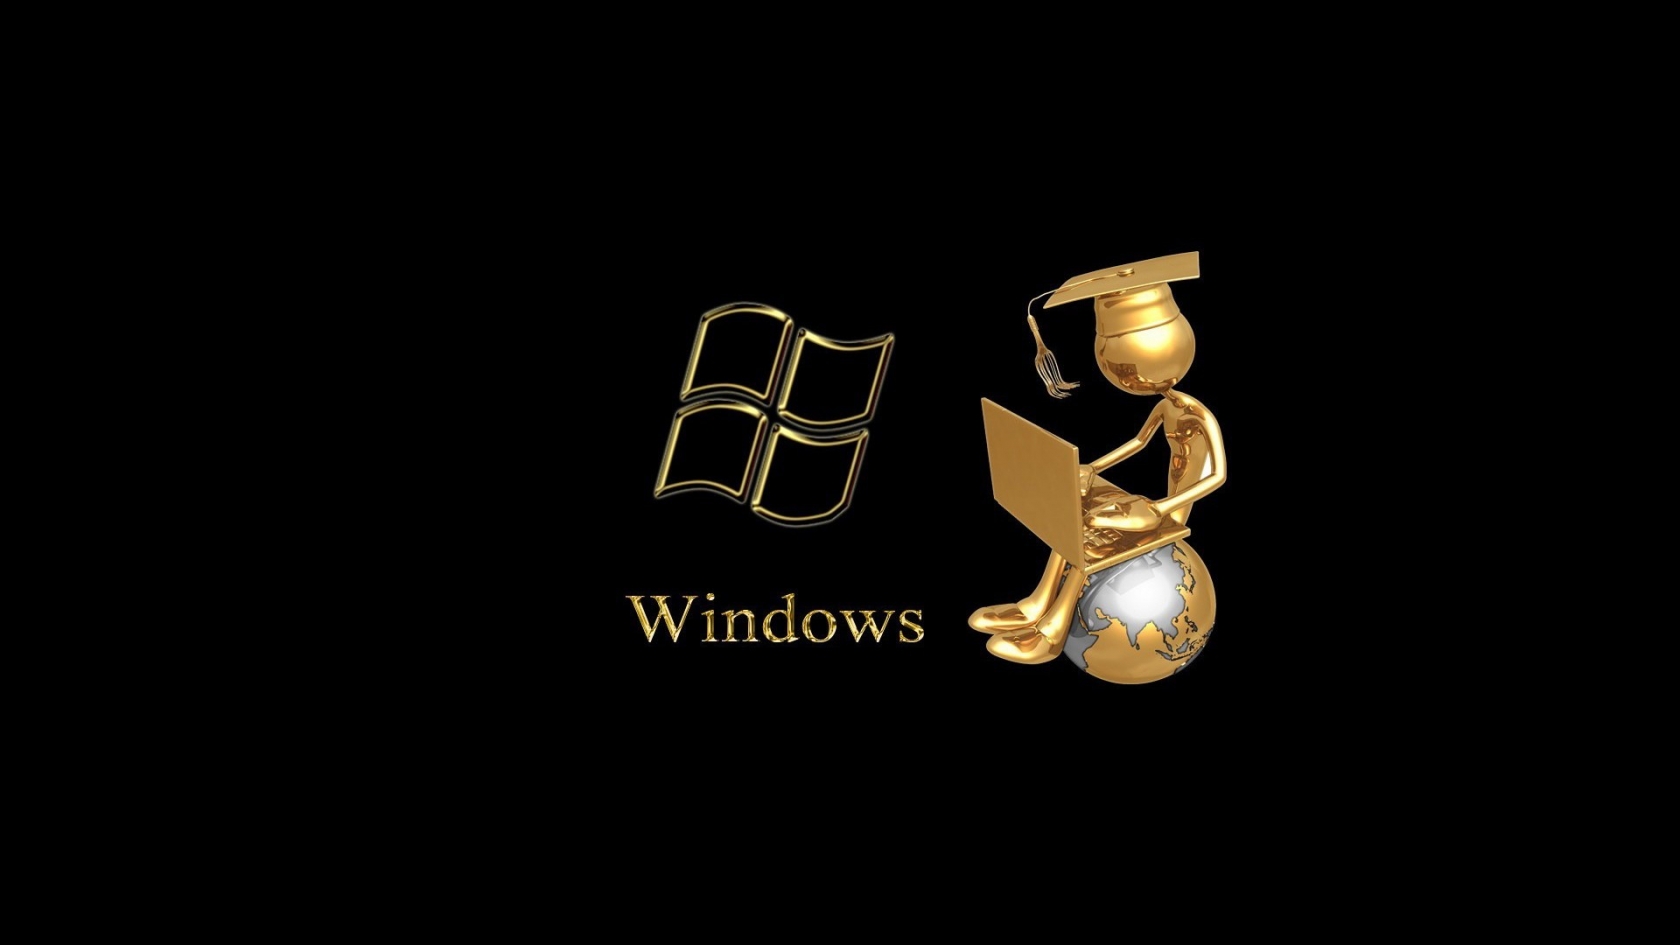 Windows Gold for 1680 x 945 HDTV resolution